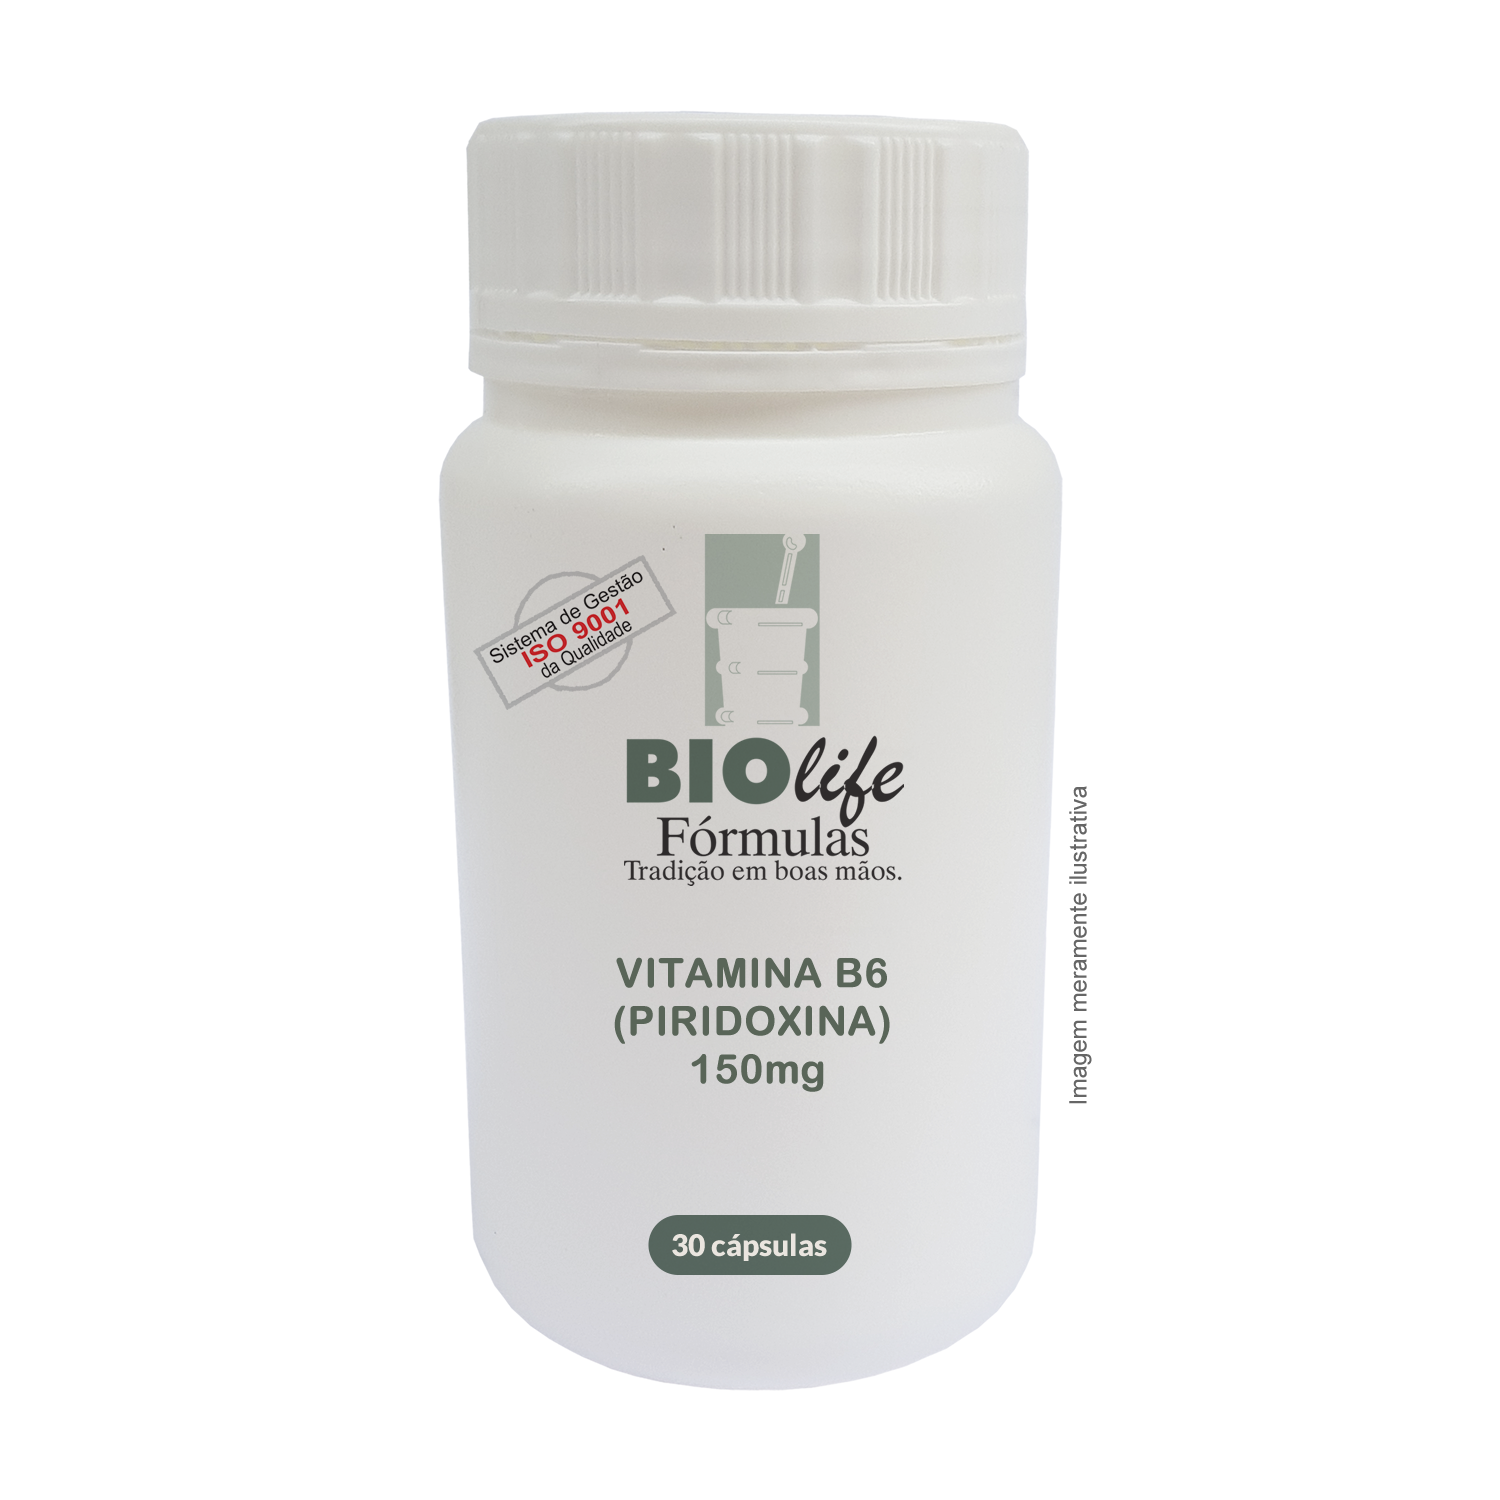 VITAMINA B6 - (PIRIDOXINA) - 150mg - 30 cápsulas - BioLife